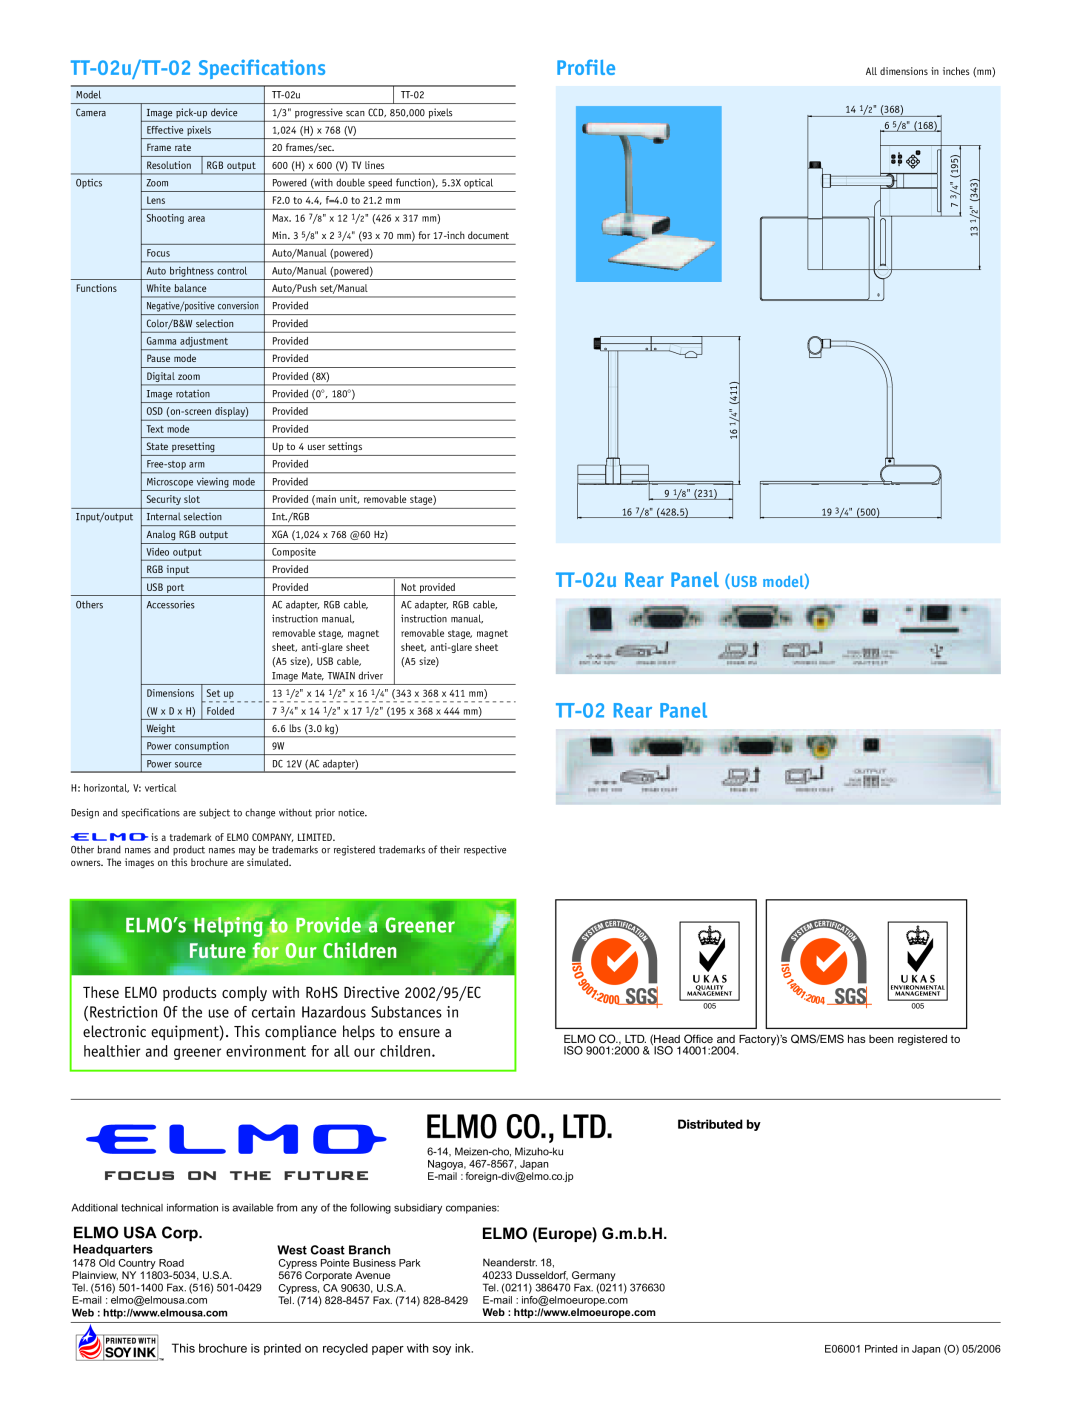 Elmo manual ELMO’s Helping to Provide a Greener Future for Our Children, TT-02u/TT-02 Specifications, TT-02 Rear Panel 